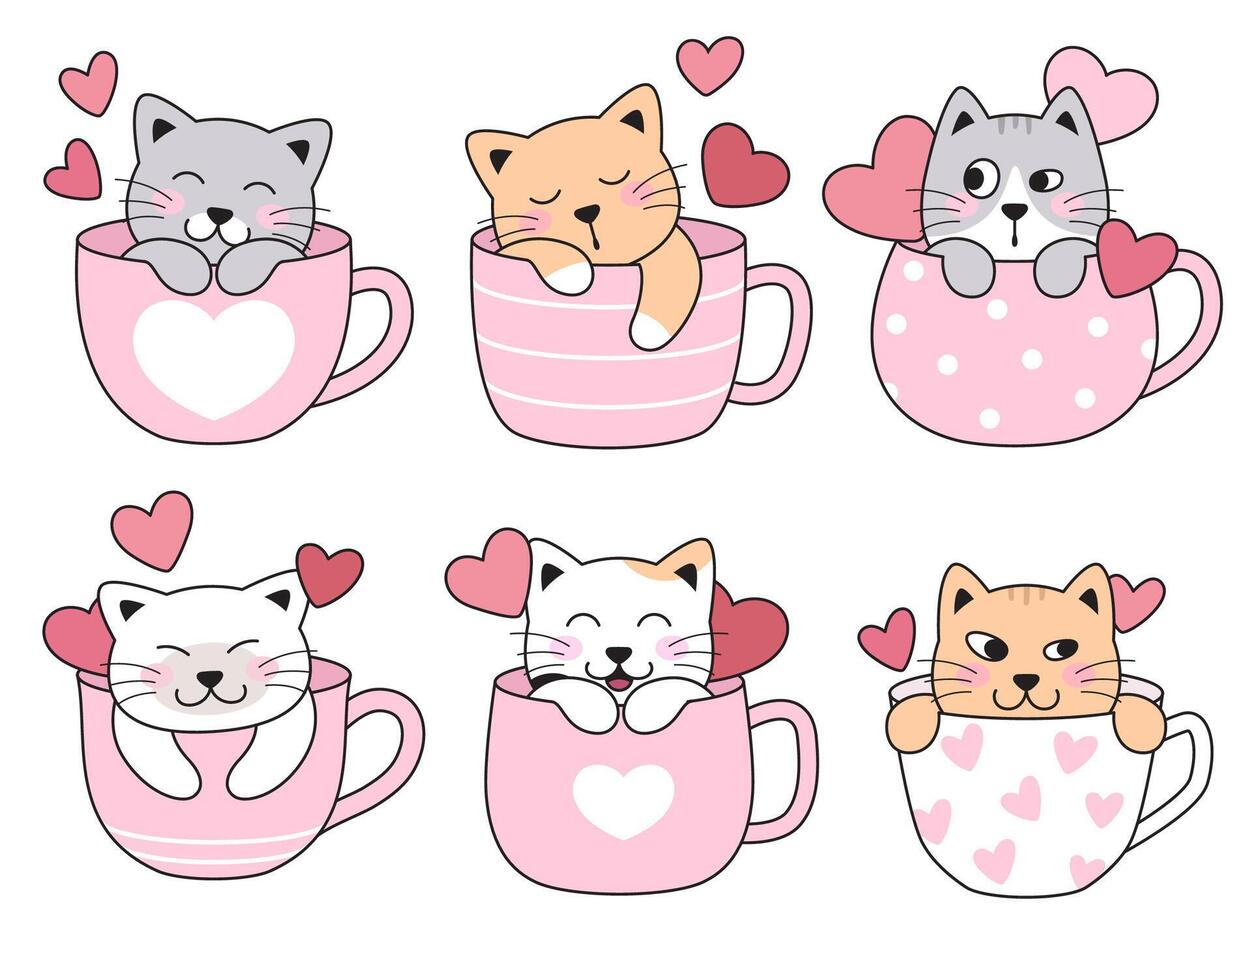 Cute cats, kittens in tea, coffee cups, mugs with hearts. Sleeping, hiding, happy, love pets. Set of simple love cartoon drawings. vector